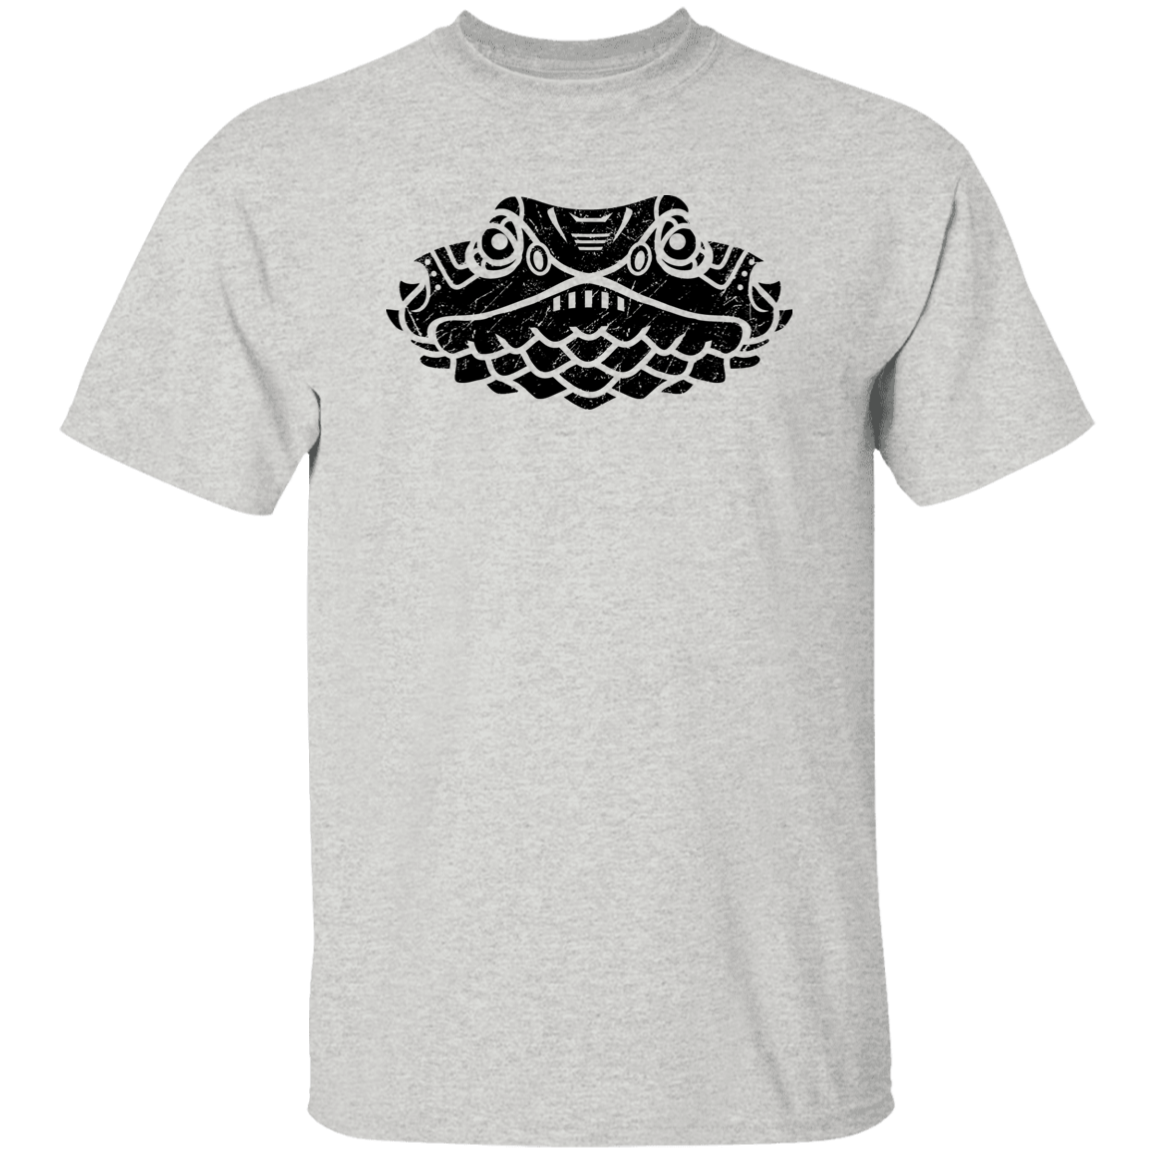 Black Distressed Emblem T-Shirt for Kids (Lizard/Queenie)